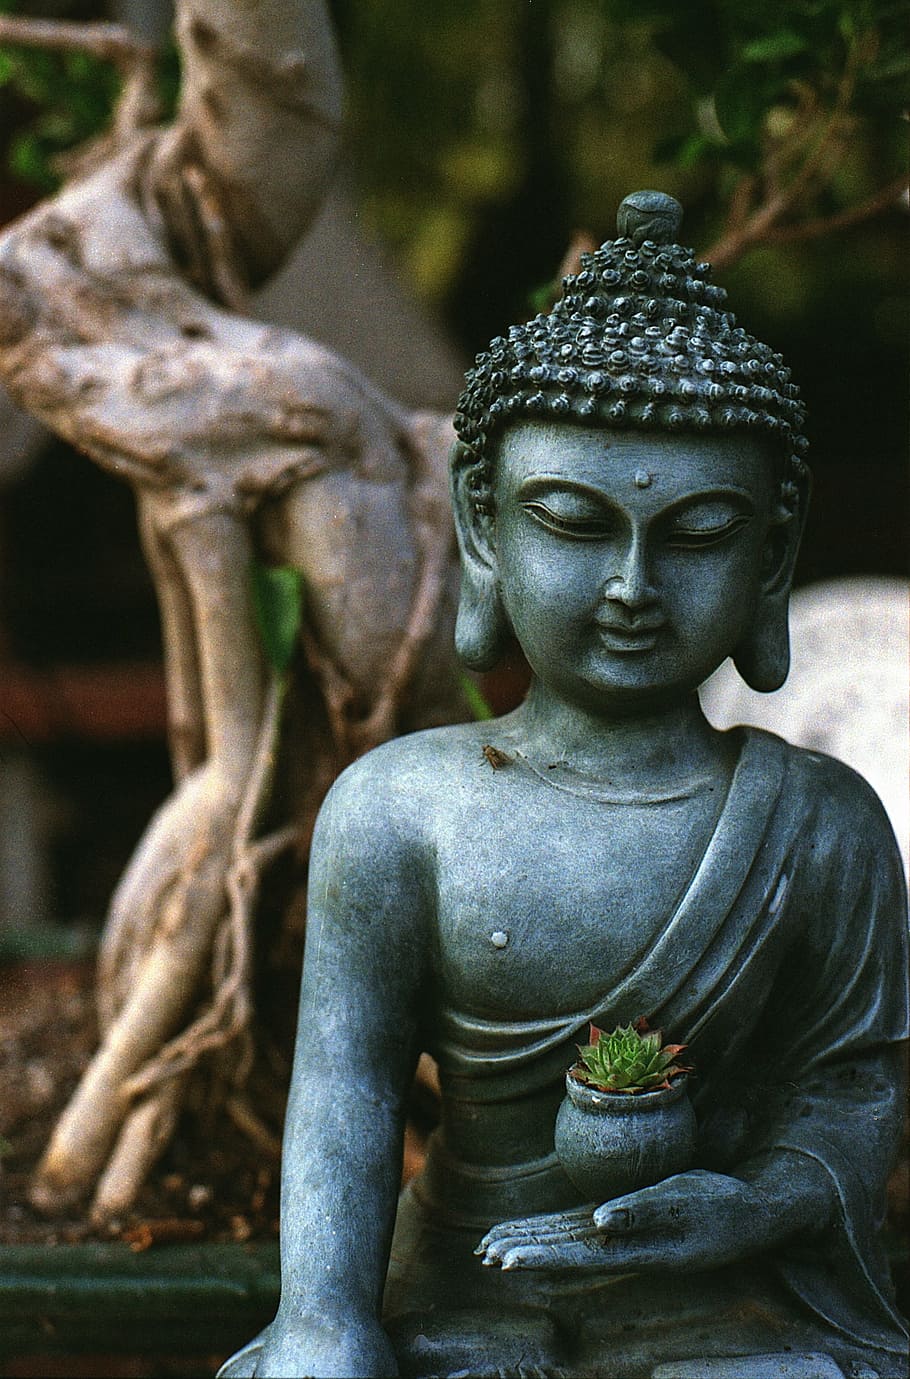 gray Buddha figurine holding green plant with pot photo, meditation